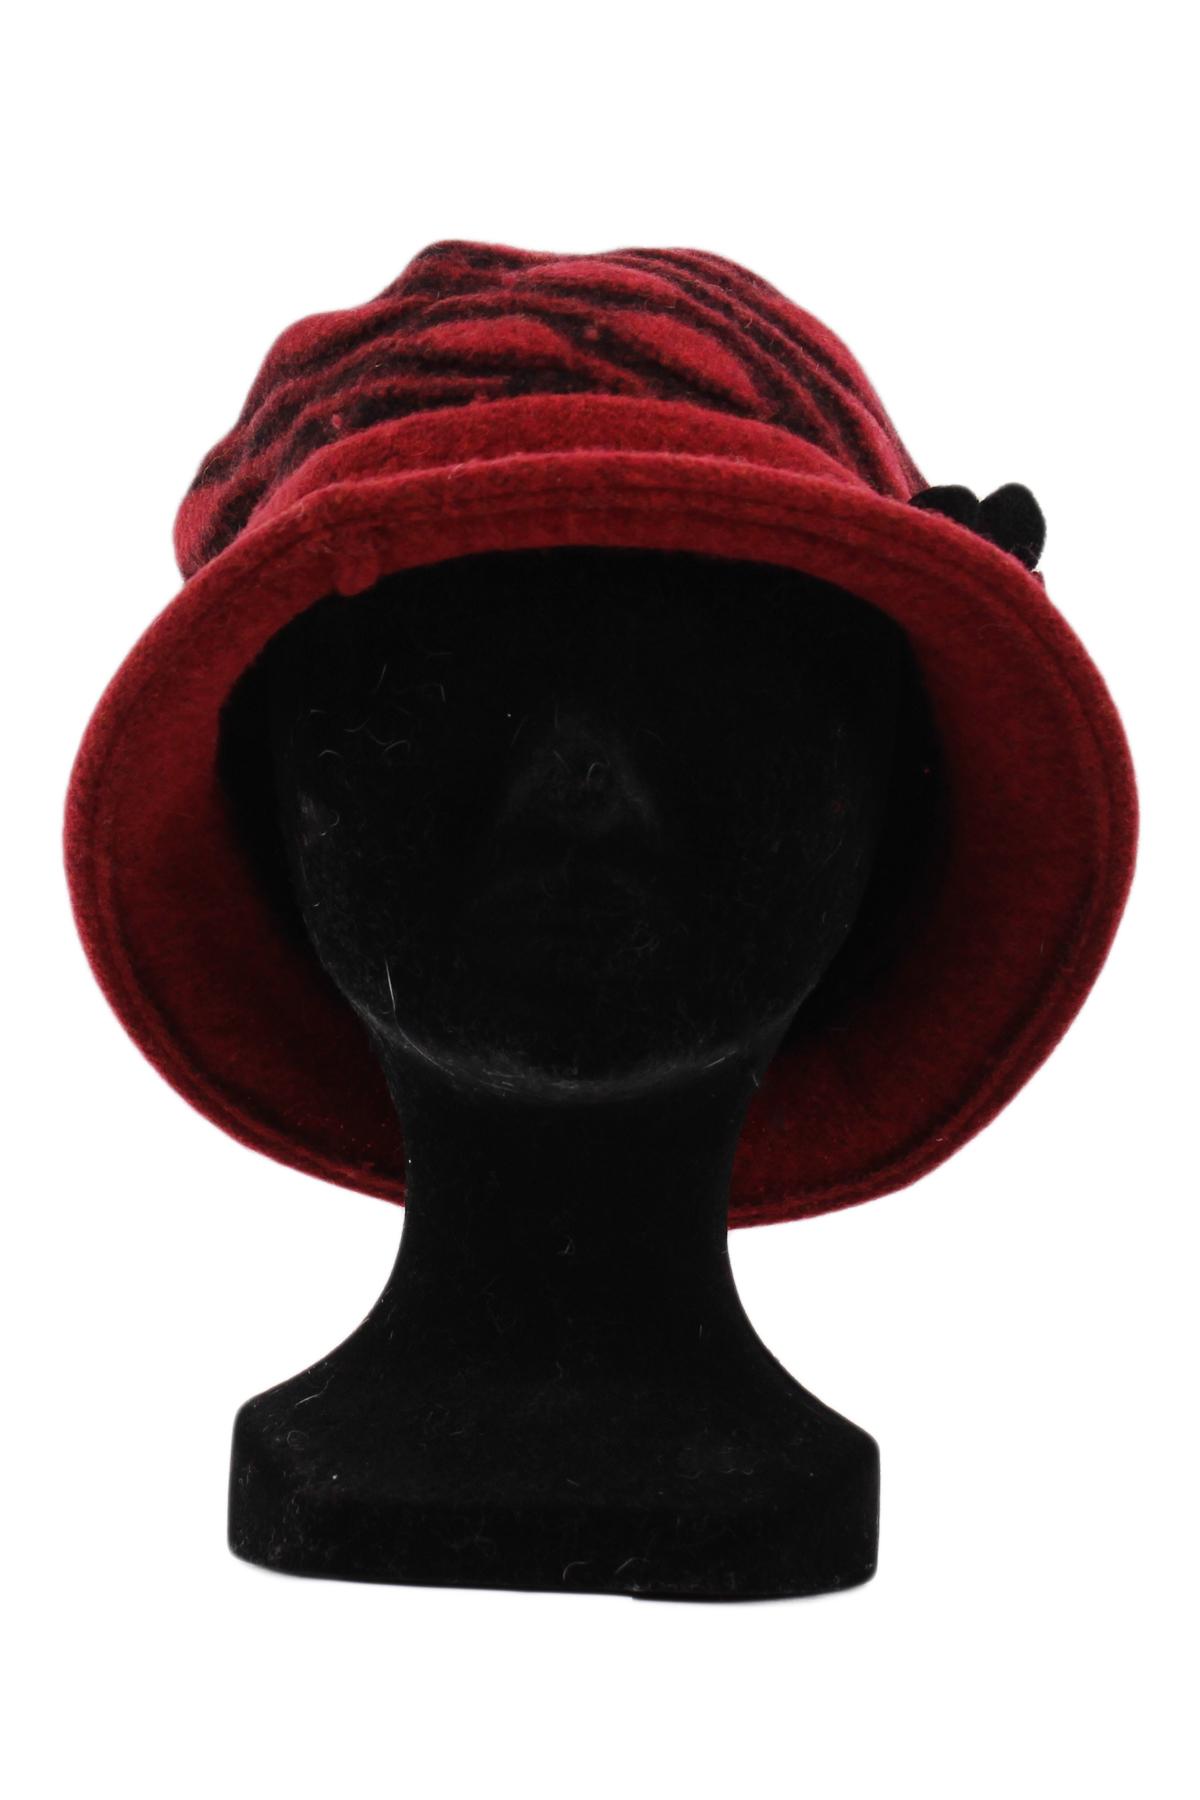 Hats Accessories Red Lil Moon HLX-AD05 #c Efashion Paris